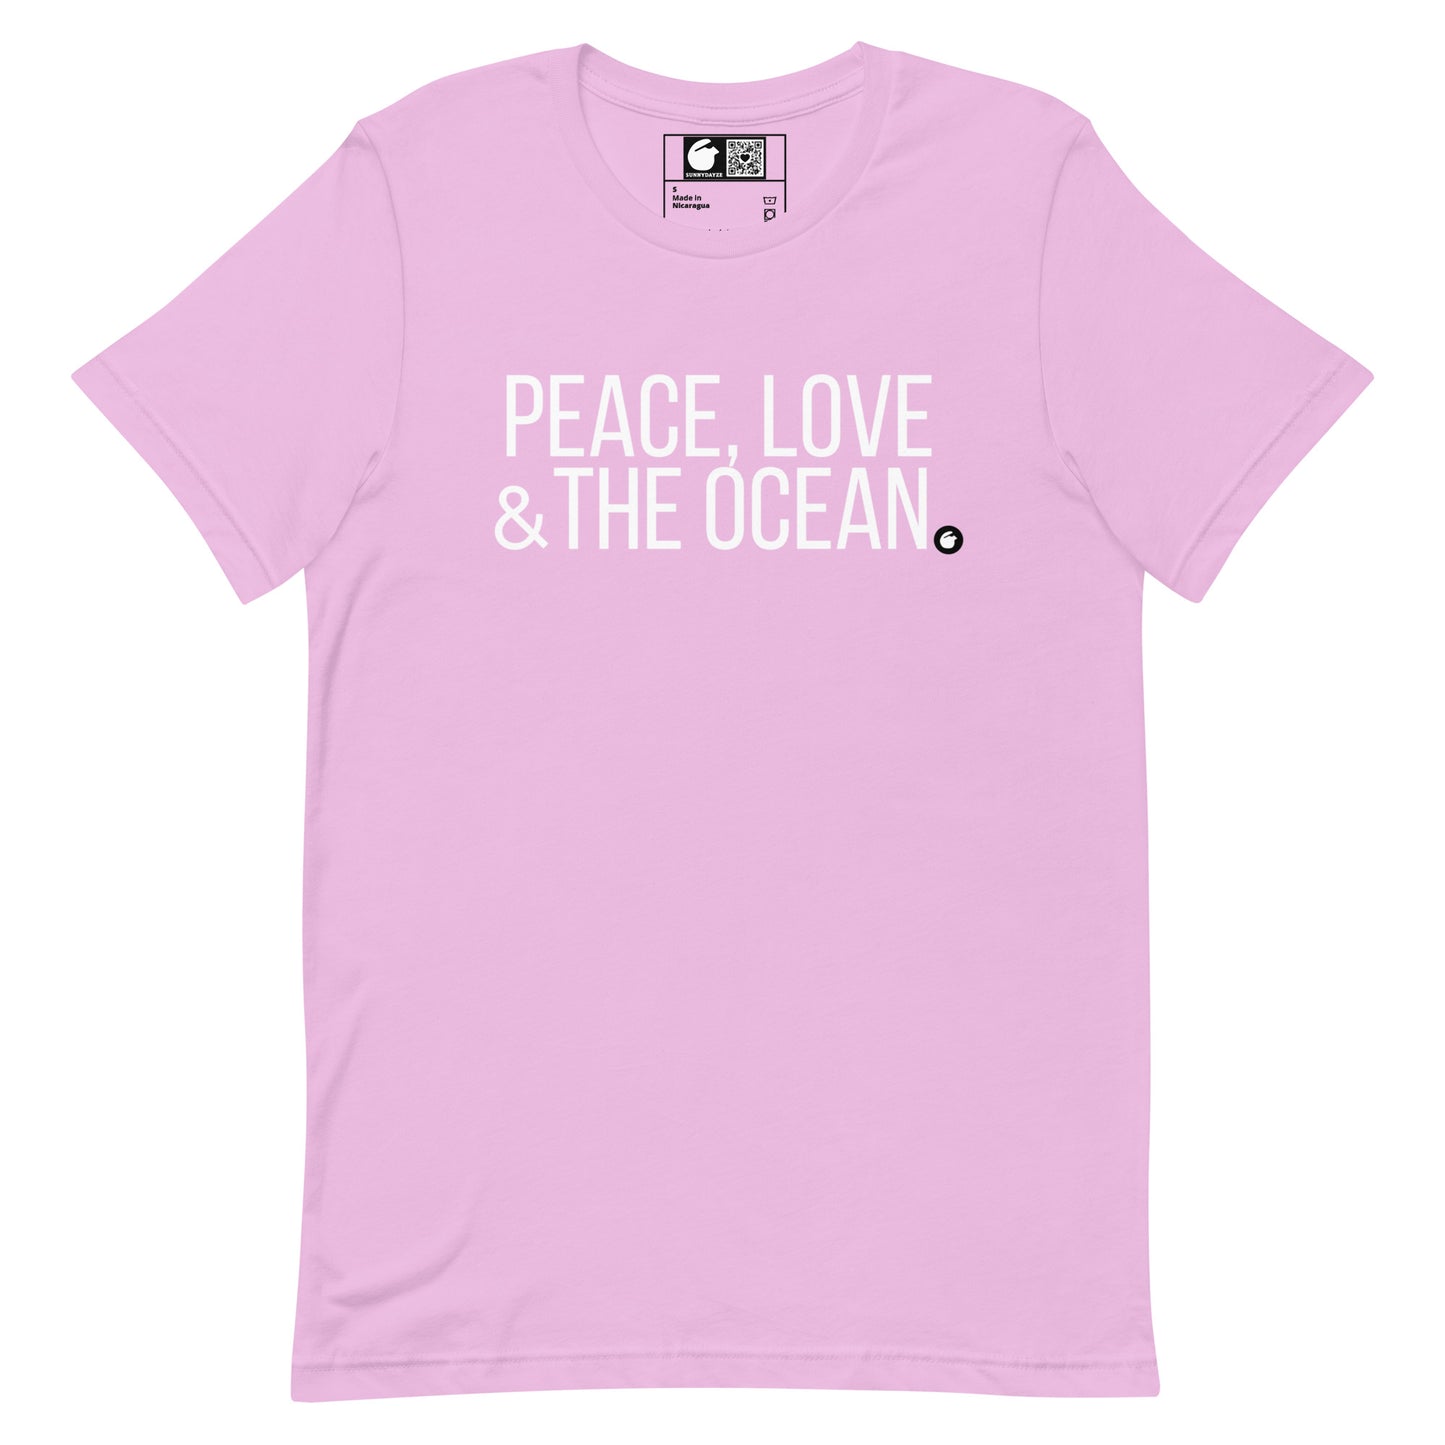 THE OCEAN Short-Sleeve Unisex t-shirt